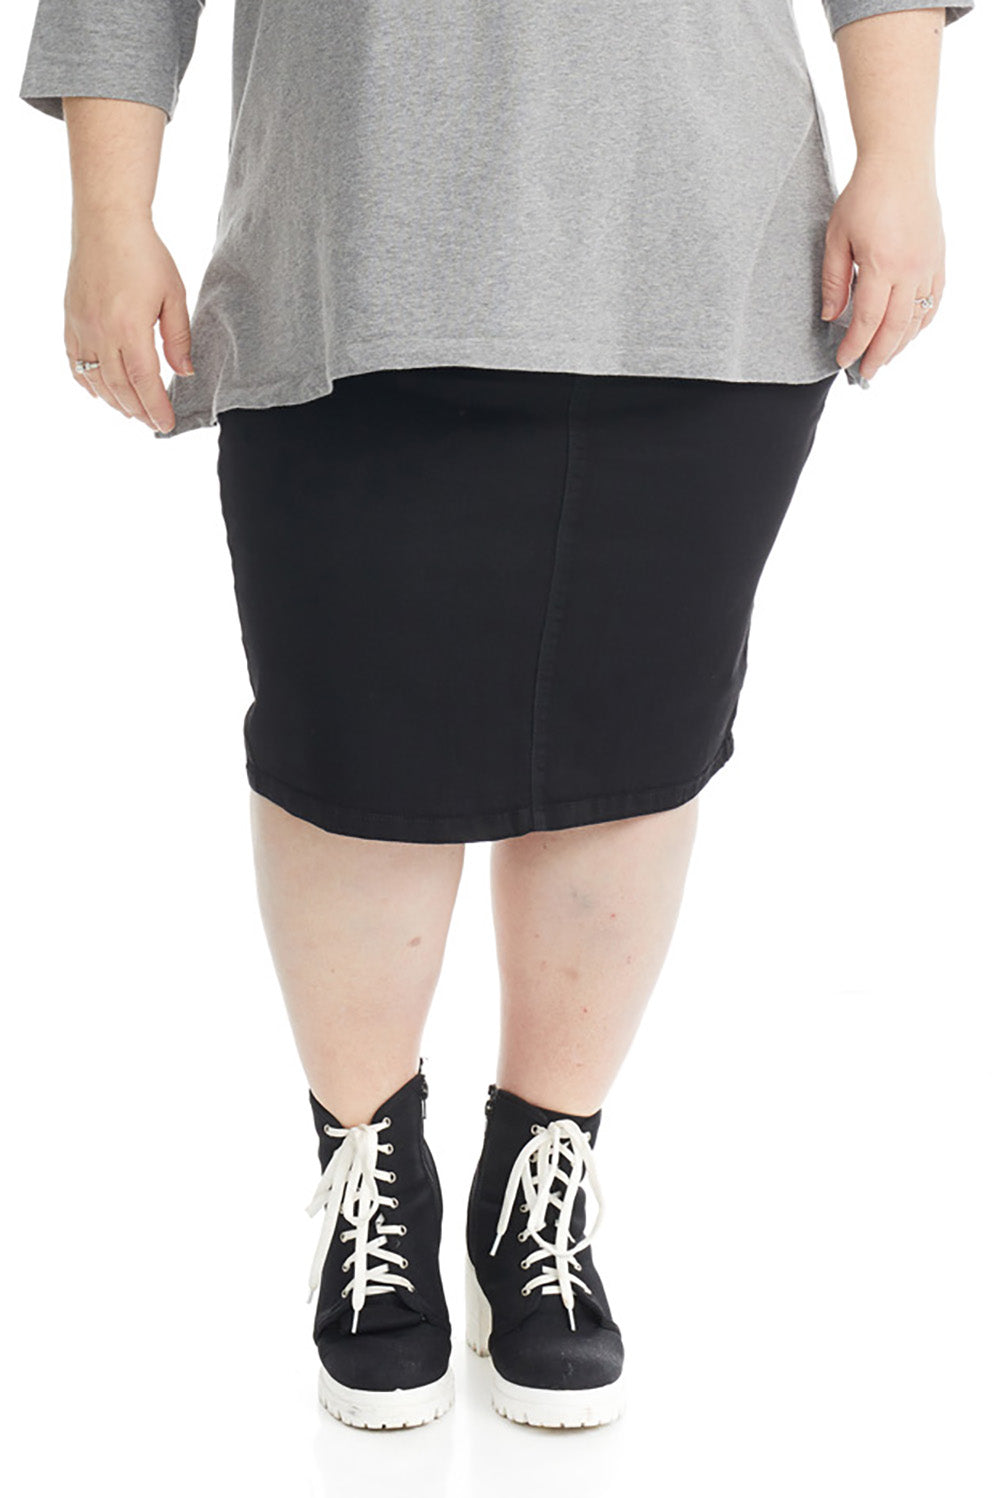 Women Sexy Short Denim Skirts Y2K Low Waist Bodycon Mini Skirt With Pockets  Aesthetic Vintage Jeans Skirt (Color : Black, Size : Medium) price in UAE |  Amazon UAE | kanbkam